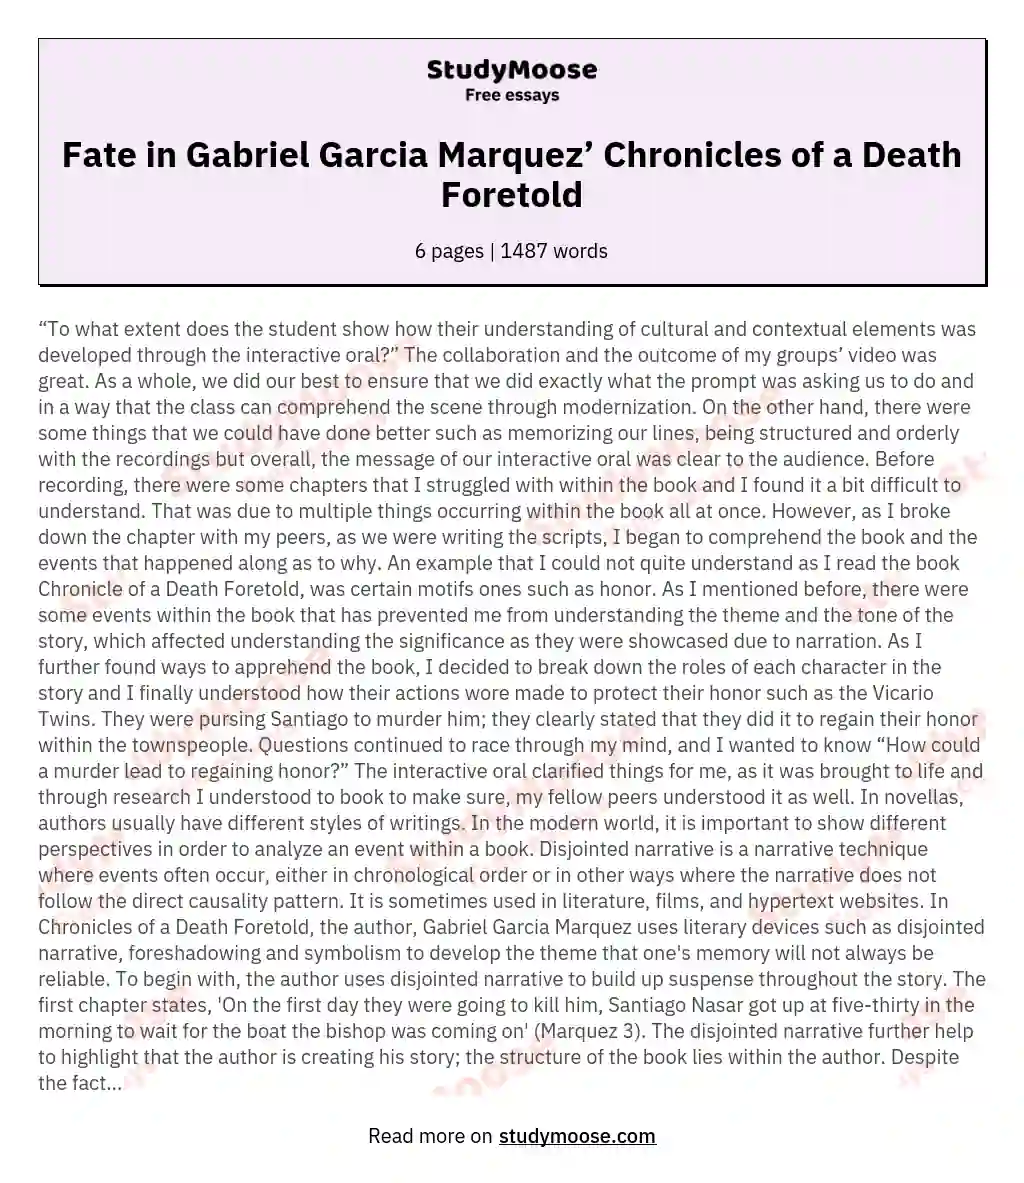 Fate in Gabriel Garcia Marquez’ Chronicles of a Death Foretold essay